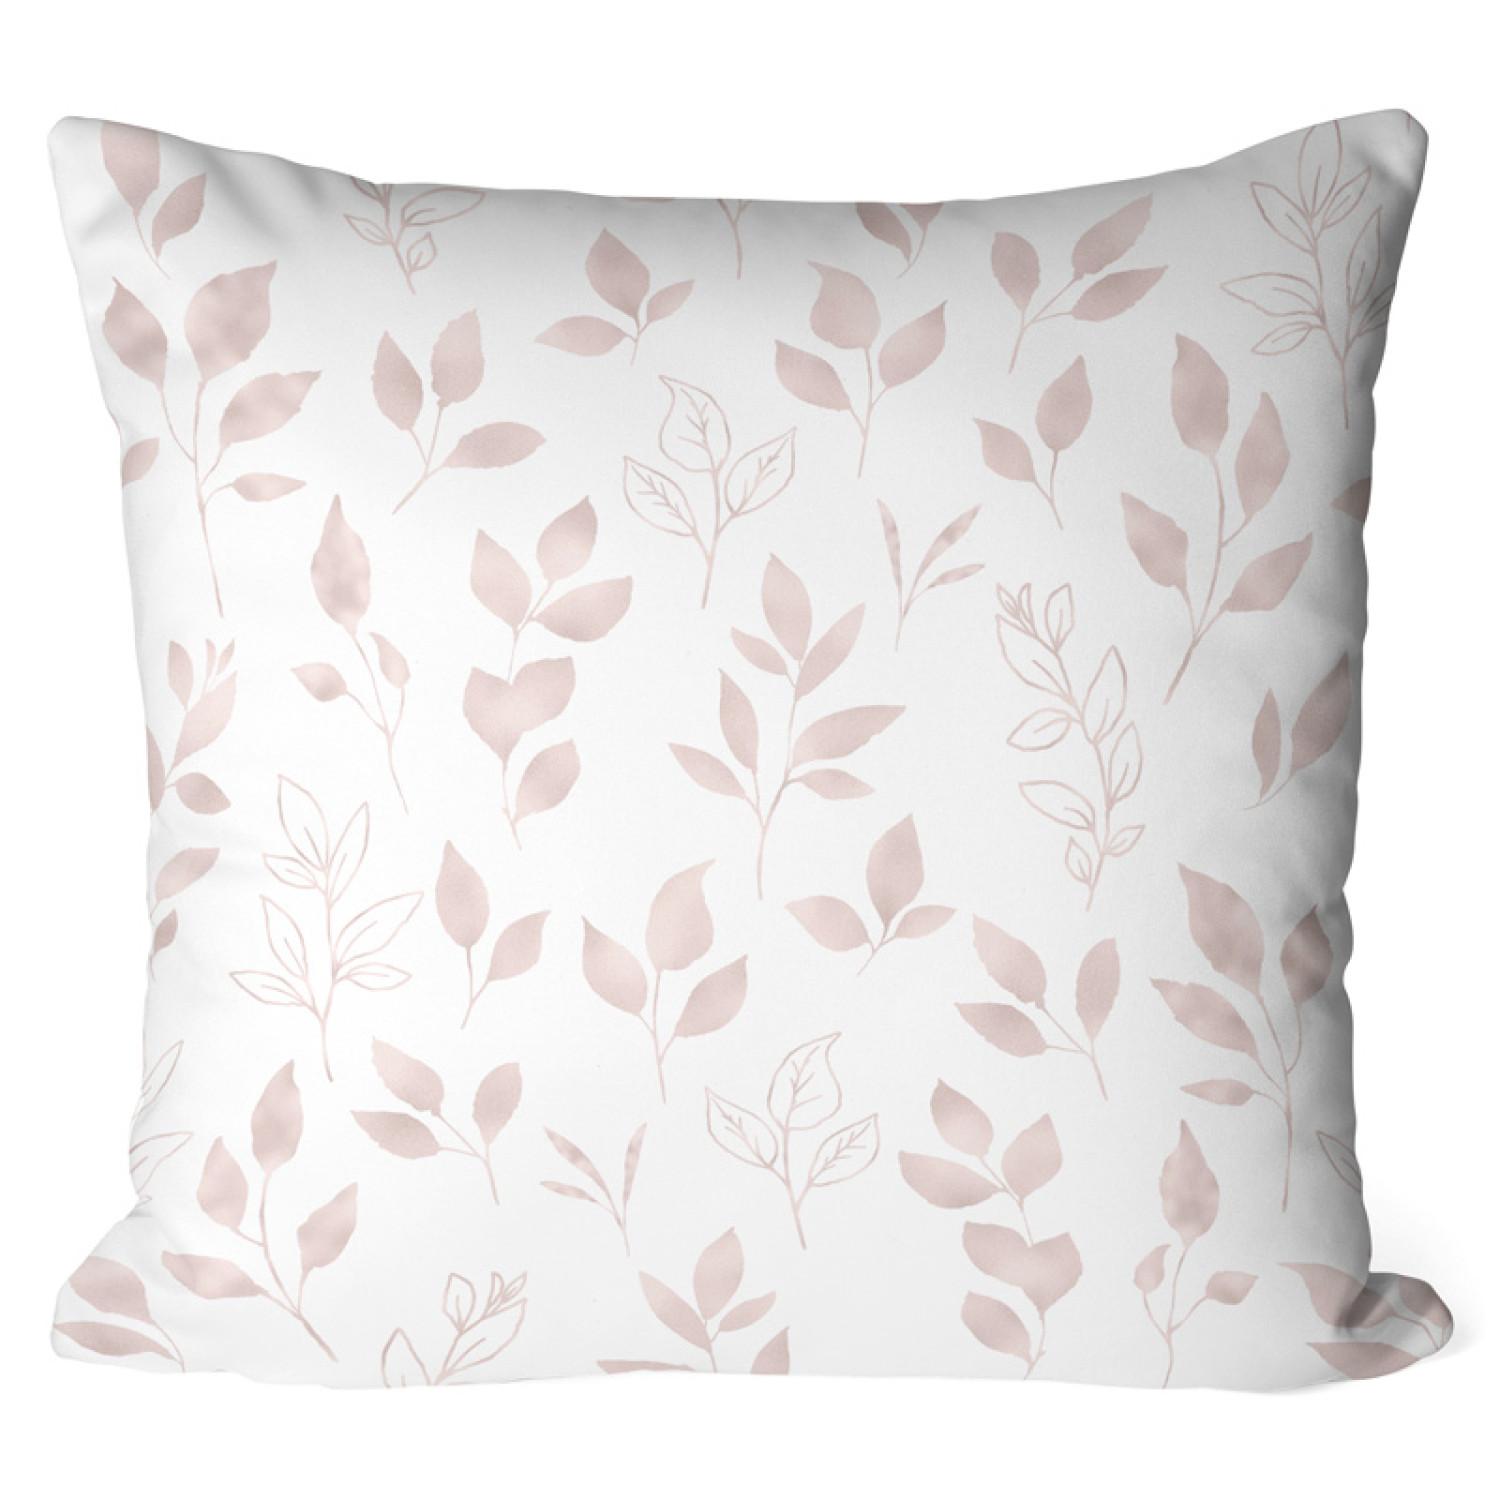 Cojín de microfibra Subtle foliage - a minimalist floral pattern on white background cushions